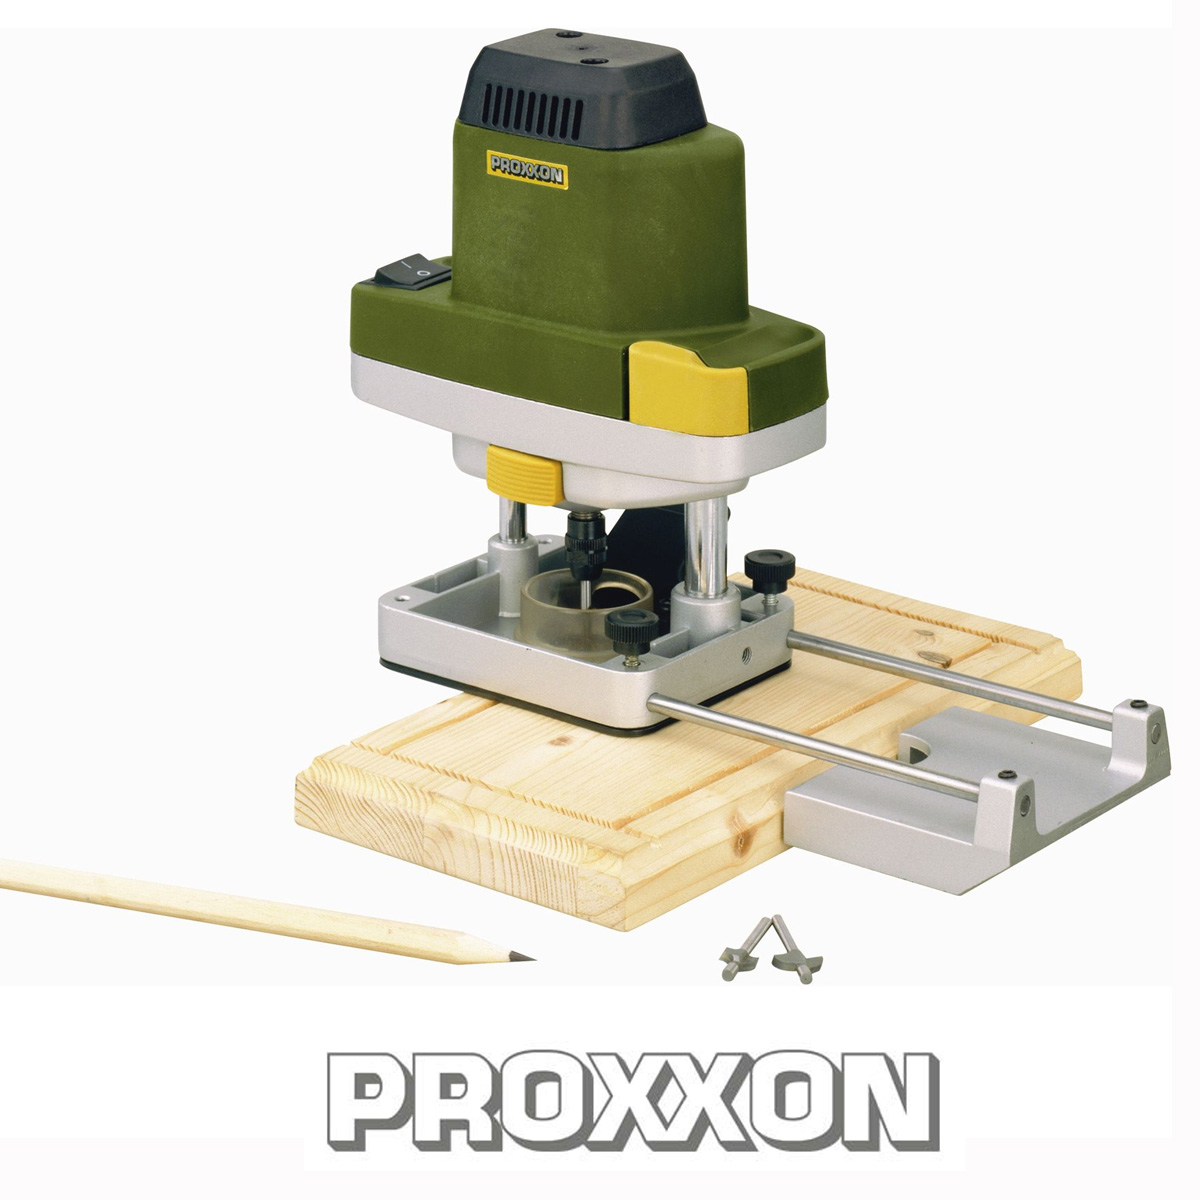 Proxxon Tools image